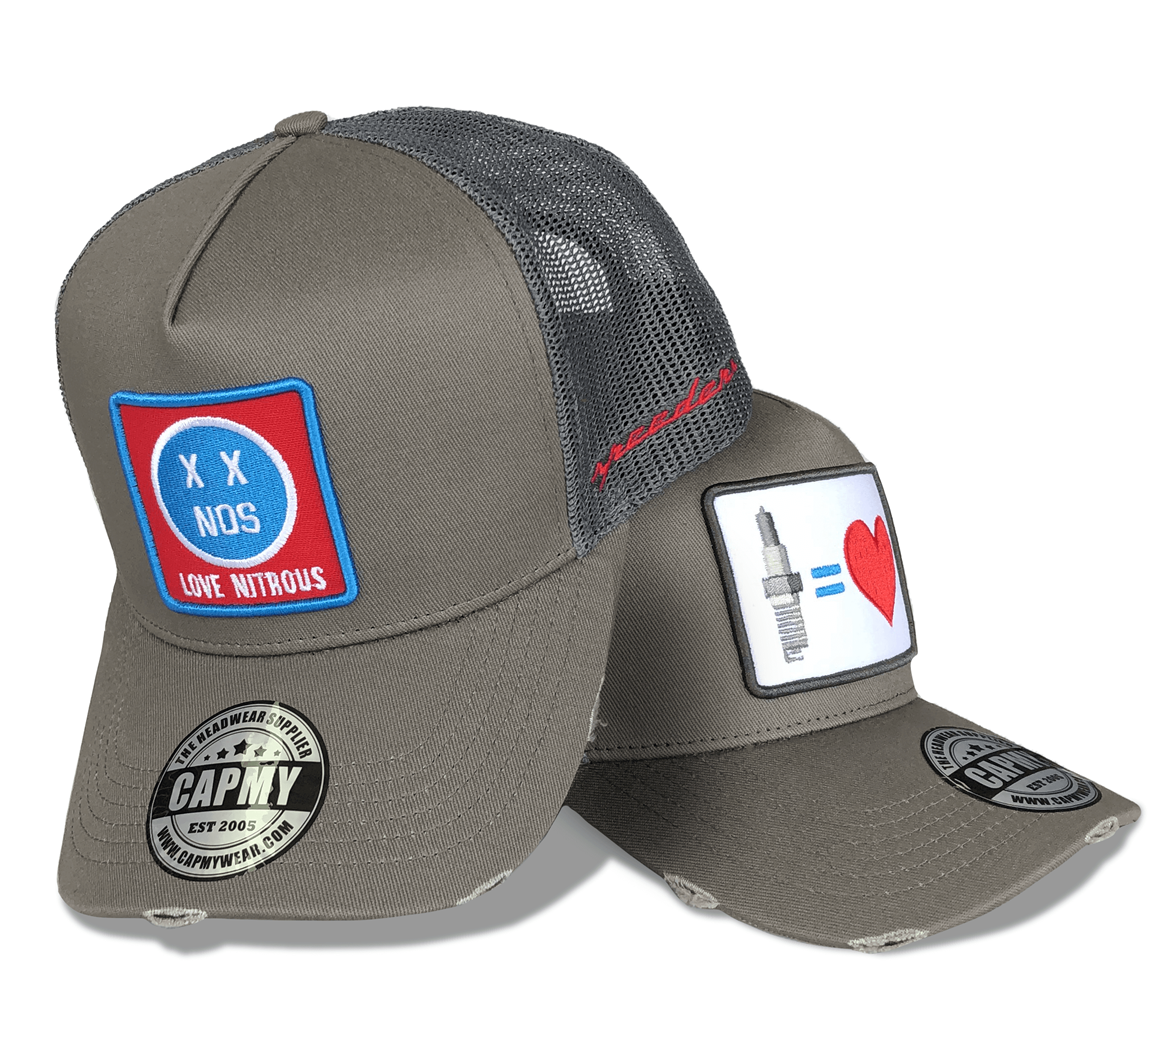 CMC-3107(High Quality 5 Panel Embroidery Patch Logo Dark Grey Trucker Cap Distressed Vintage Rip Trucker Hat)